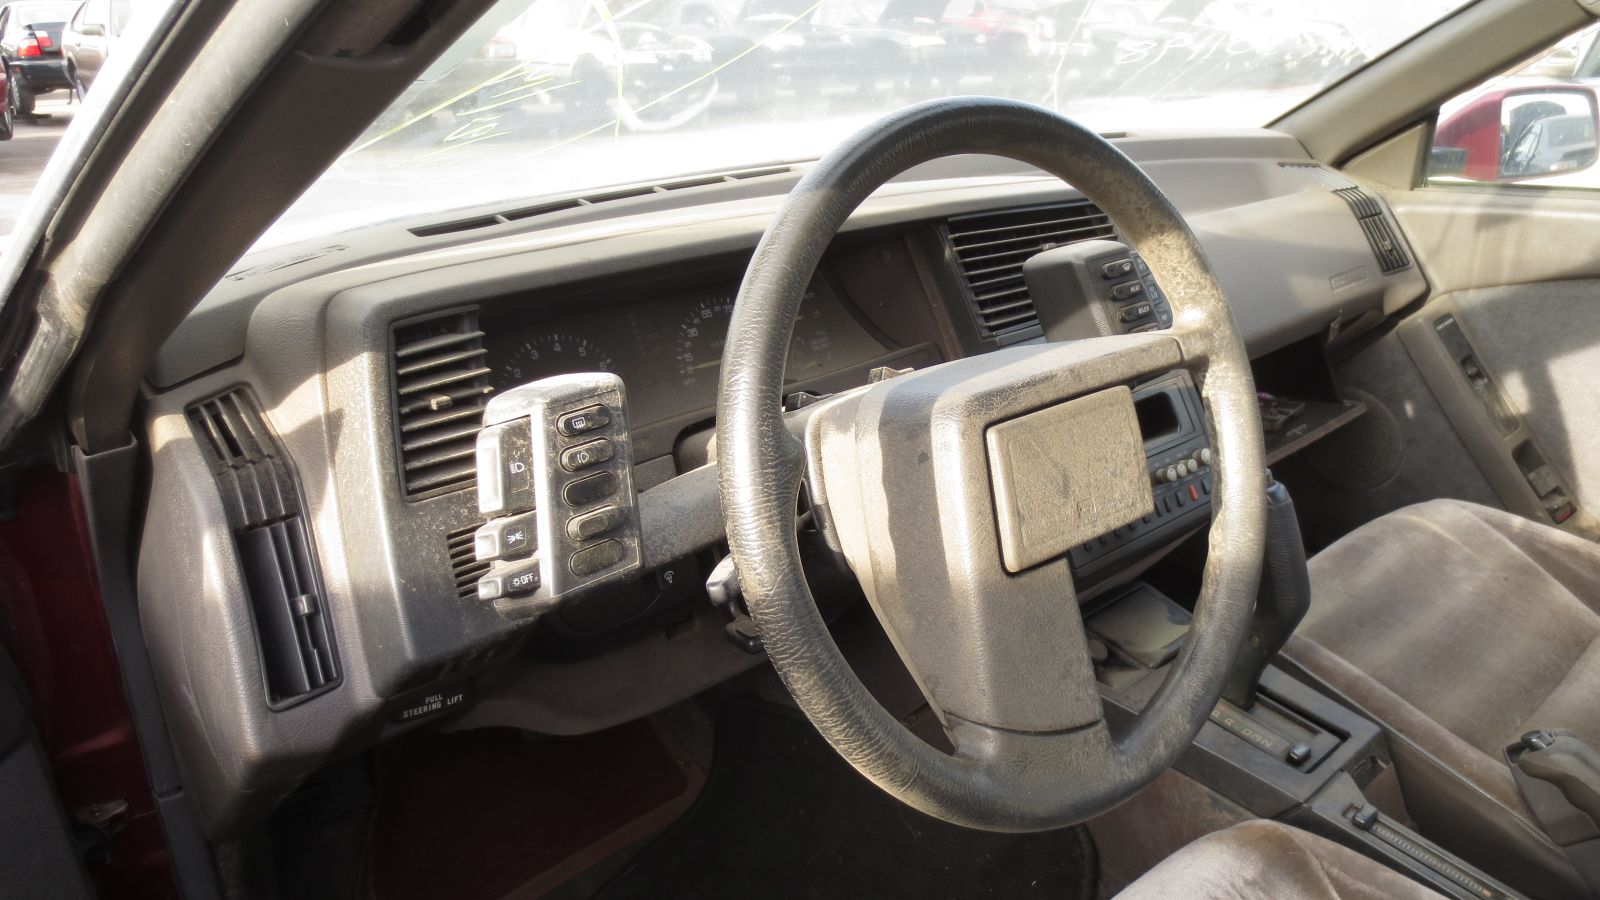 1990 Subaru XT in California wrecking yard